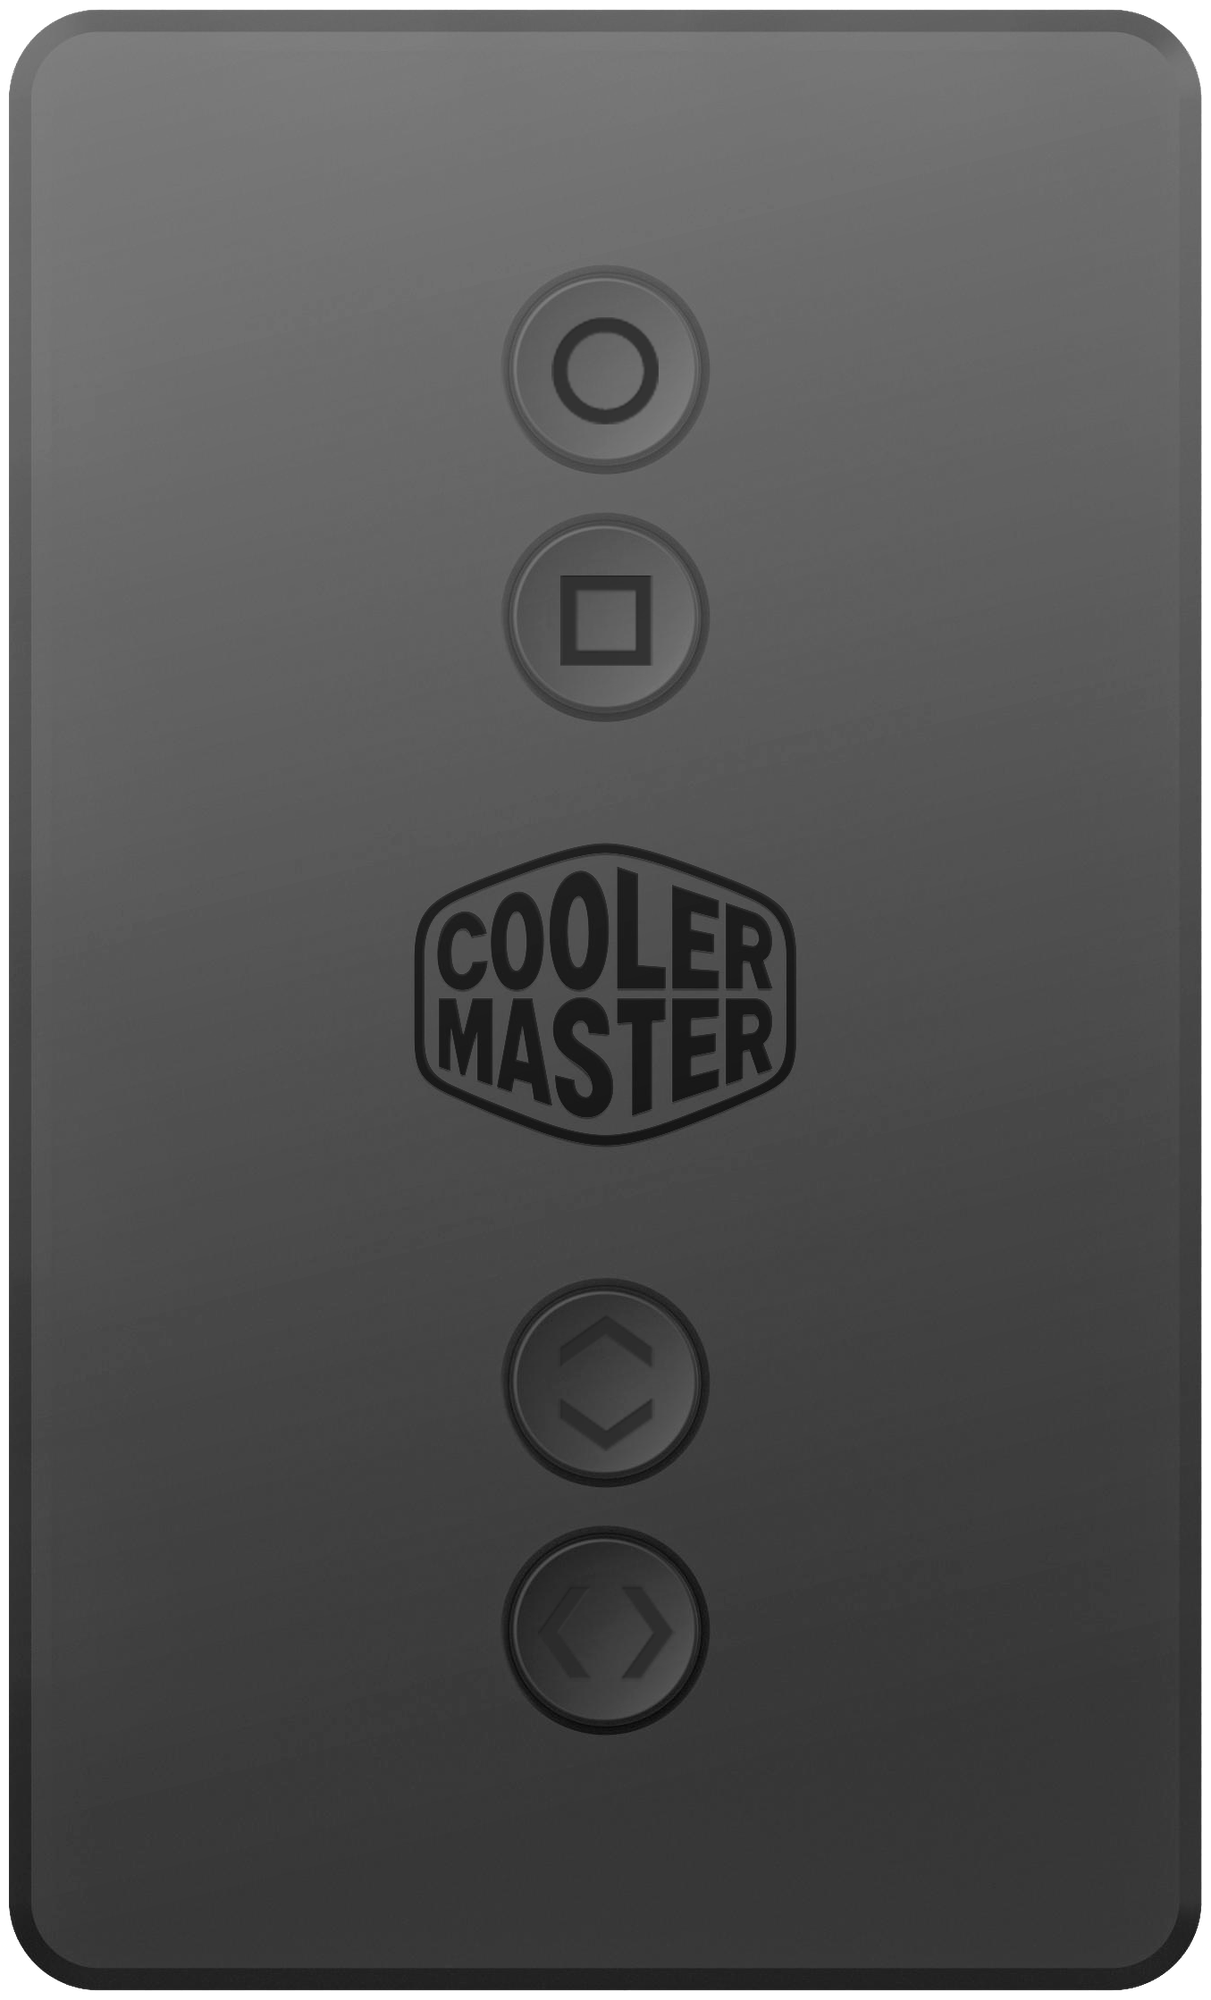 Cooler Master - фото №6